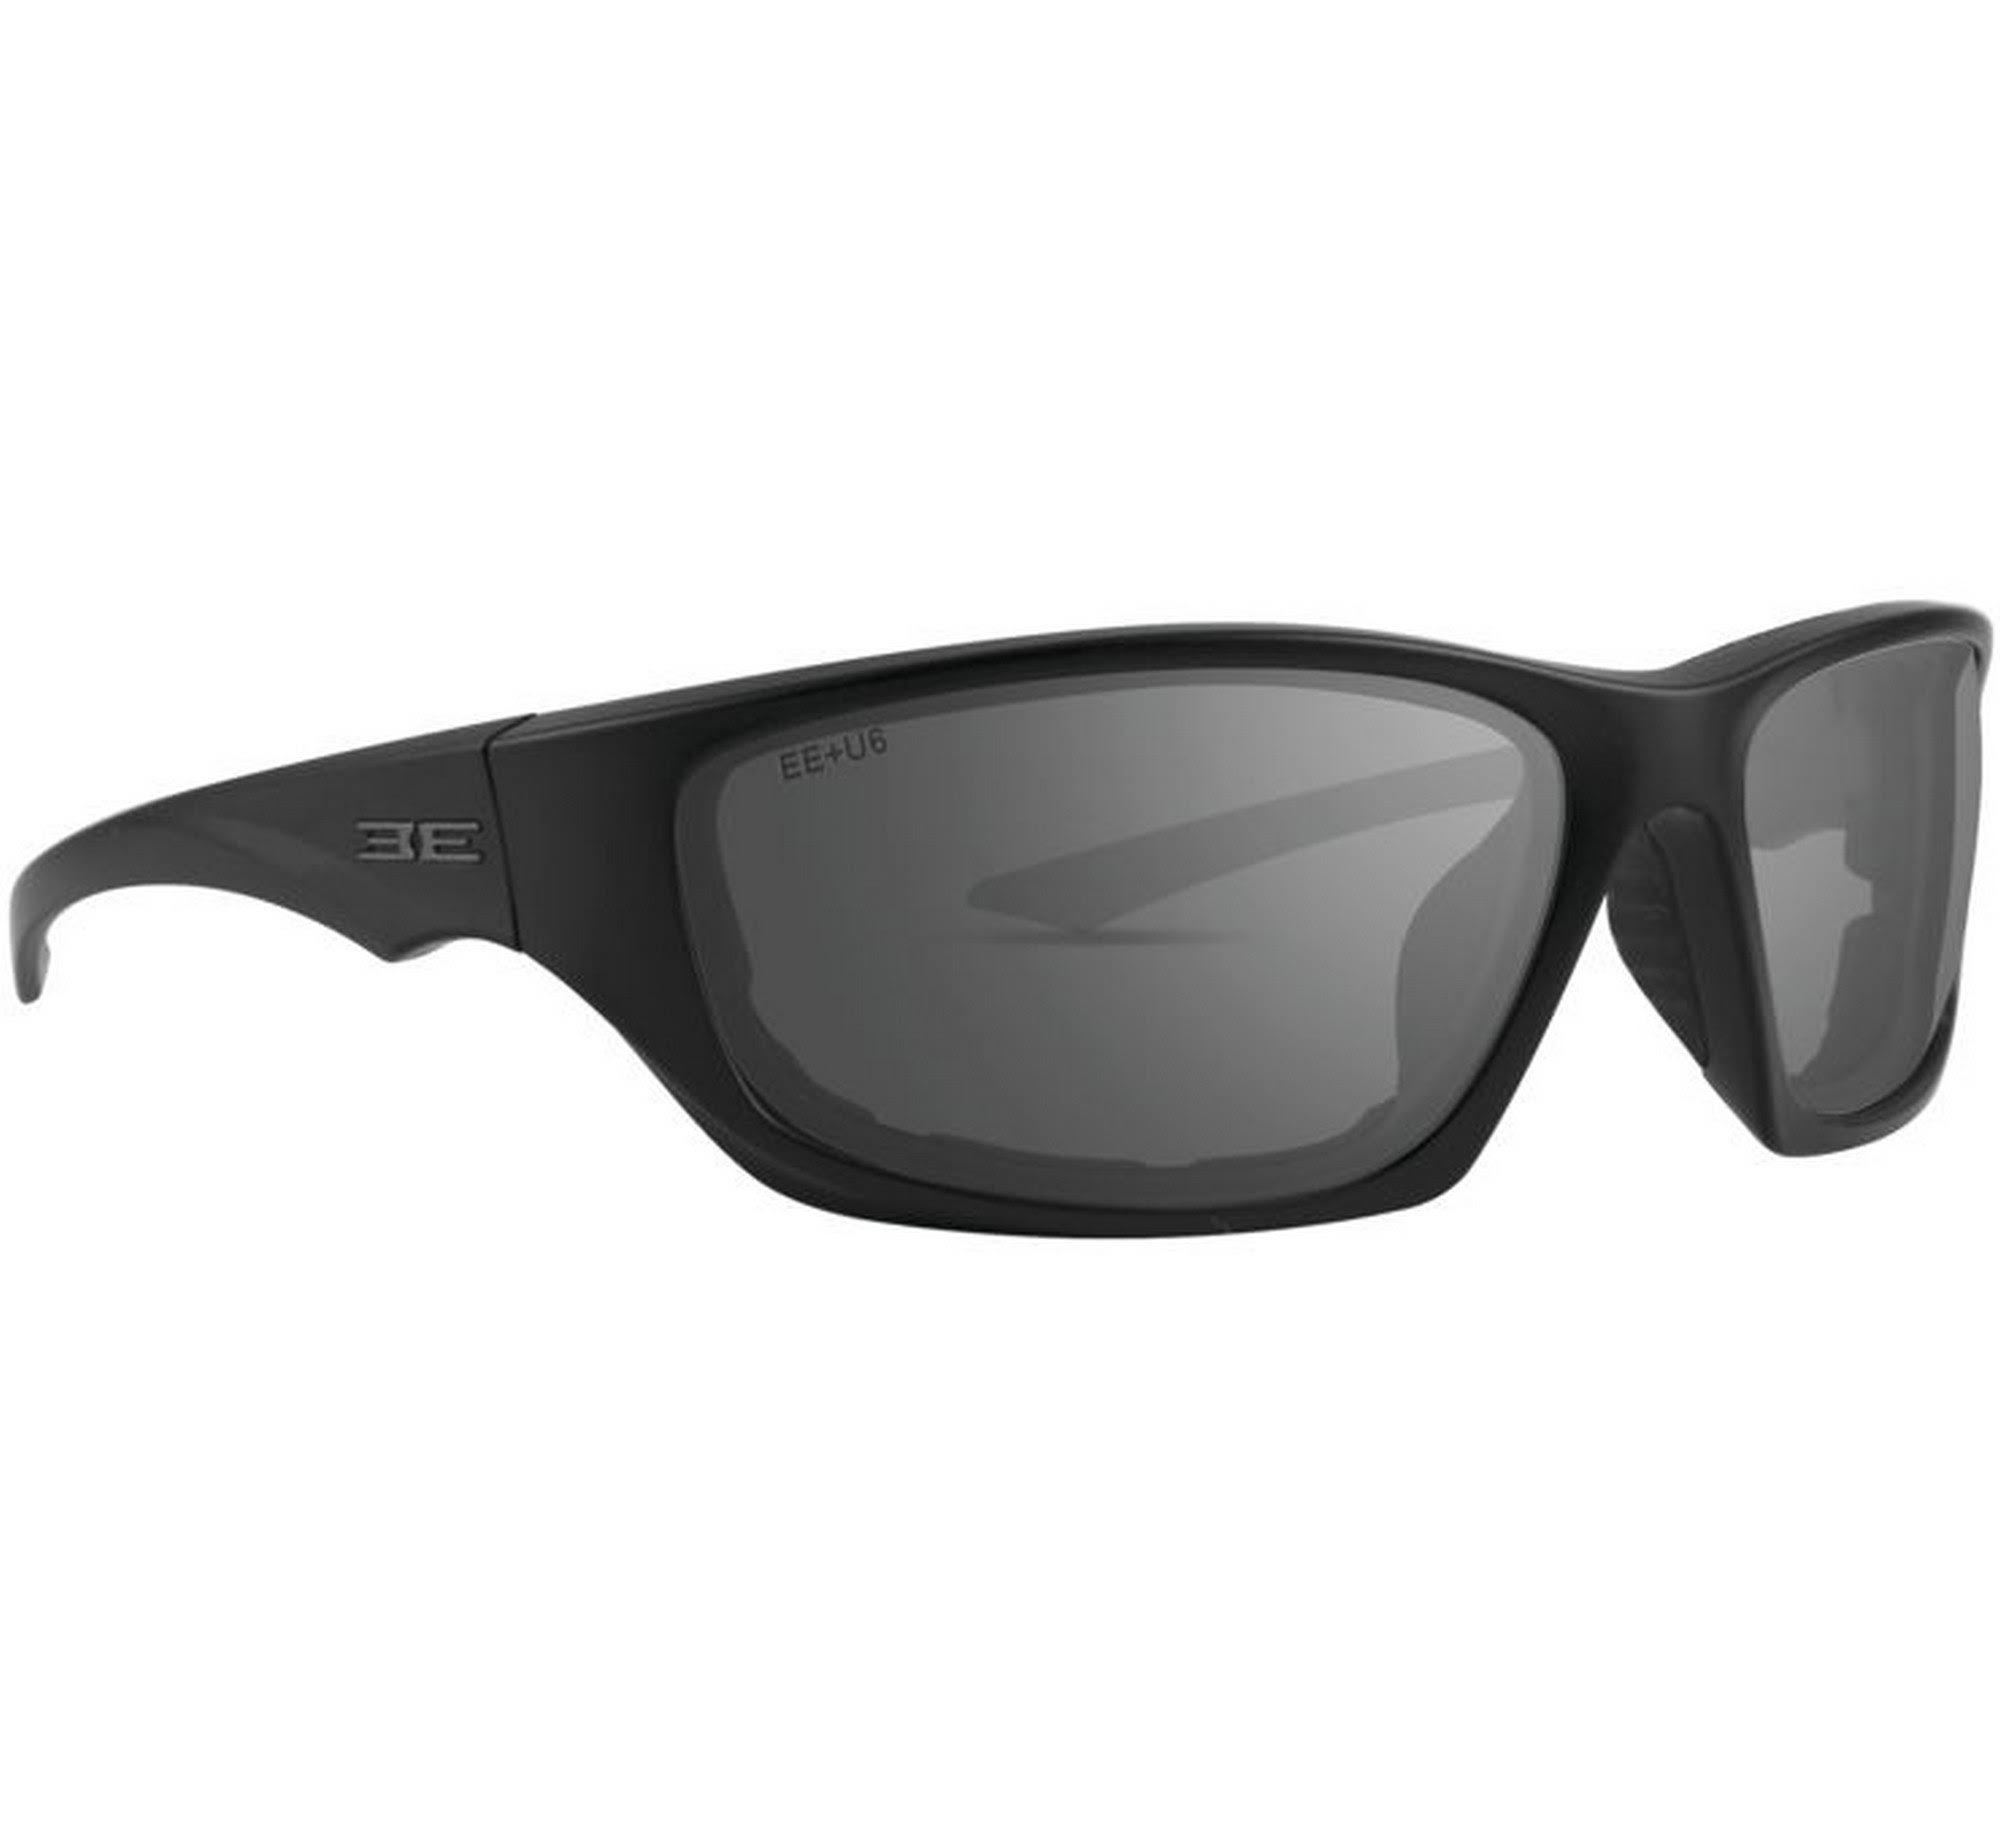 Epoch Eyewear Foam 3 Padded Motorcycle Black Frames Sunglasses ANSI Z87.1+